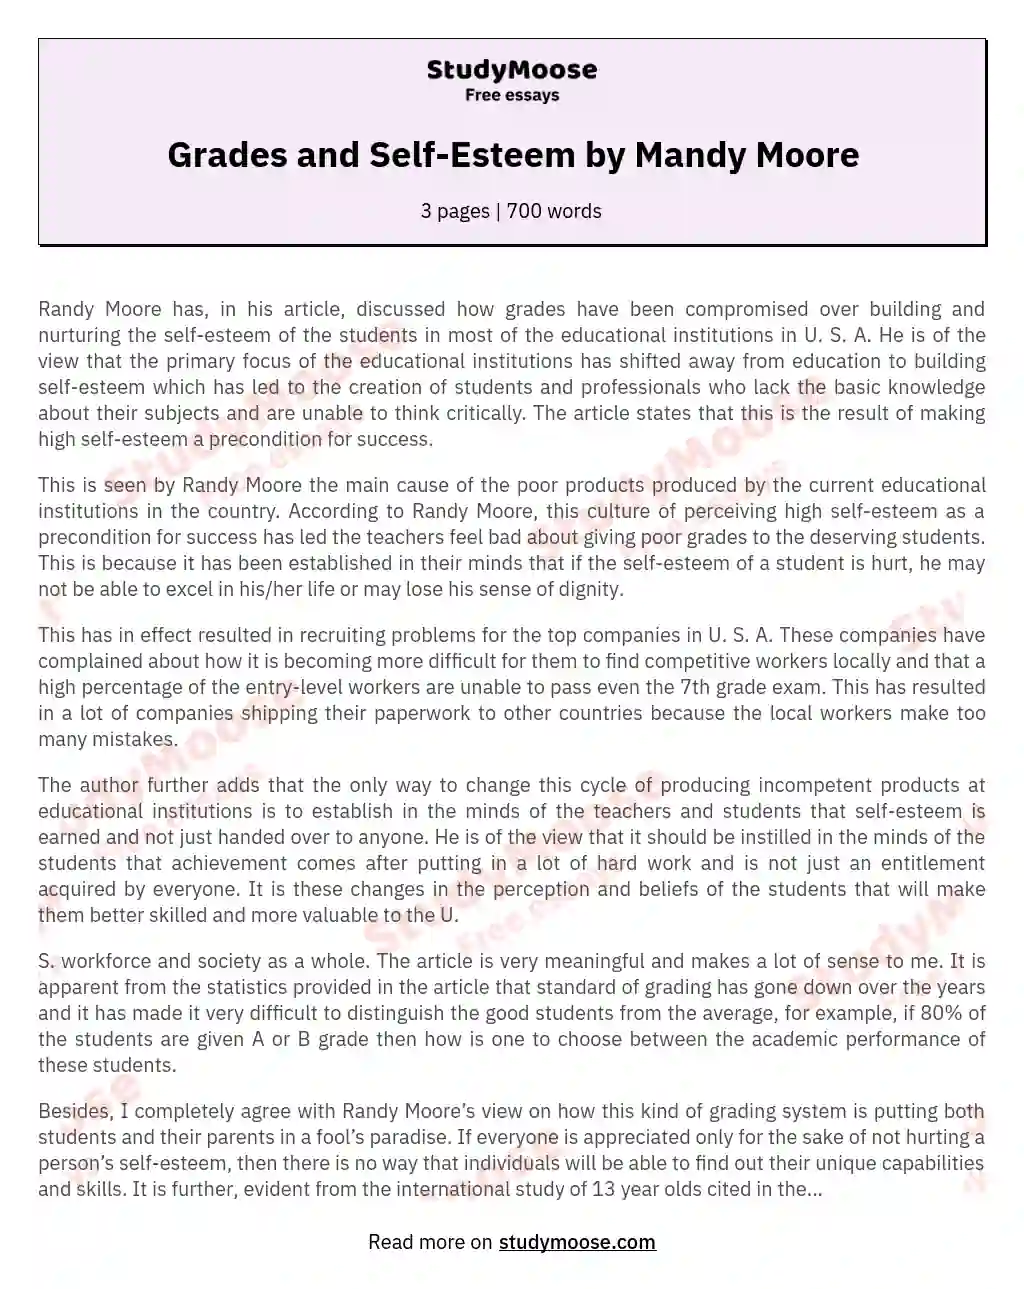 Grades and Self-Esteem by Mandy Moore